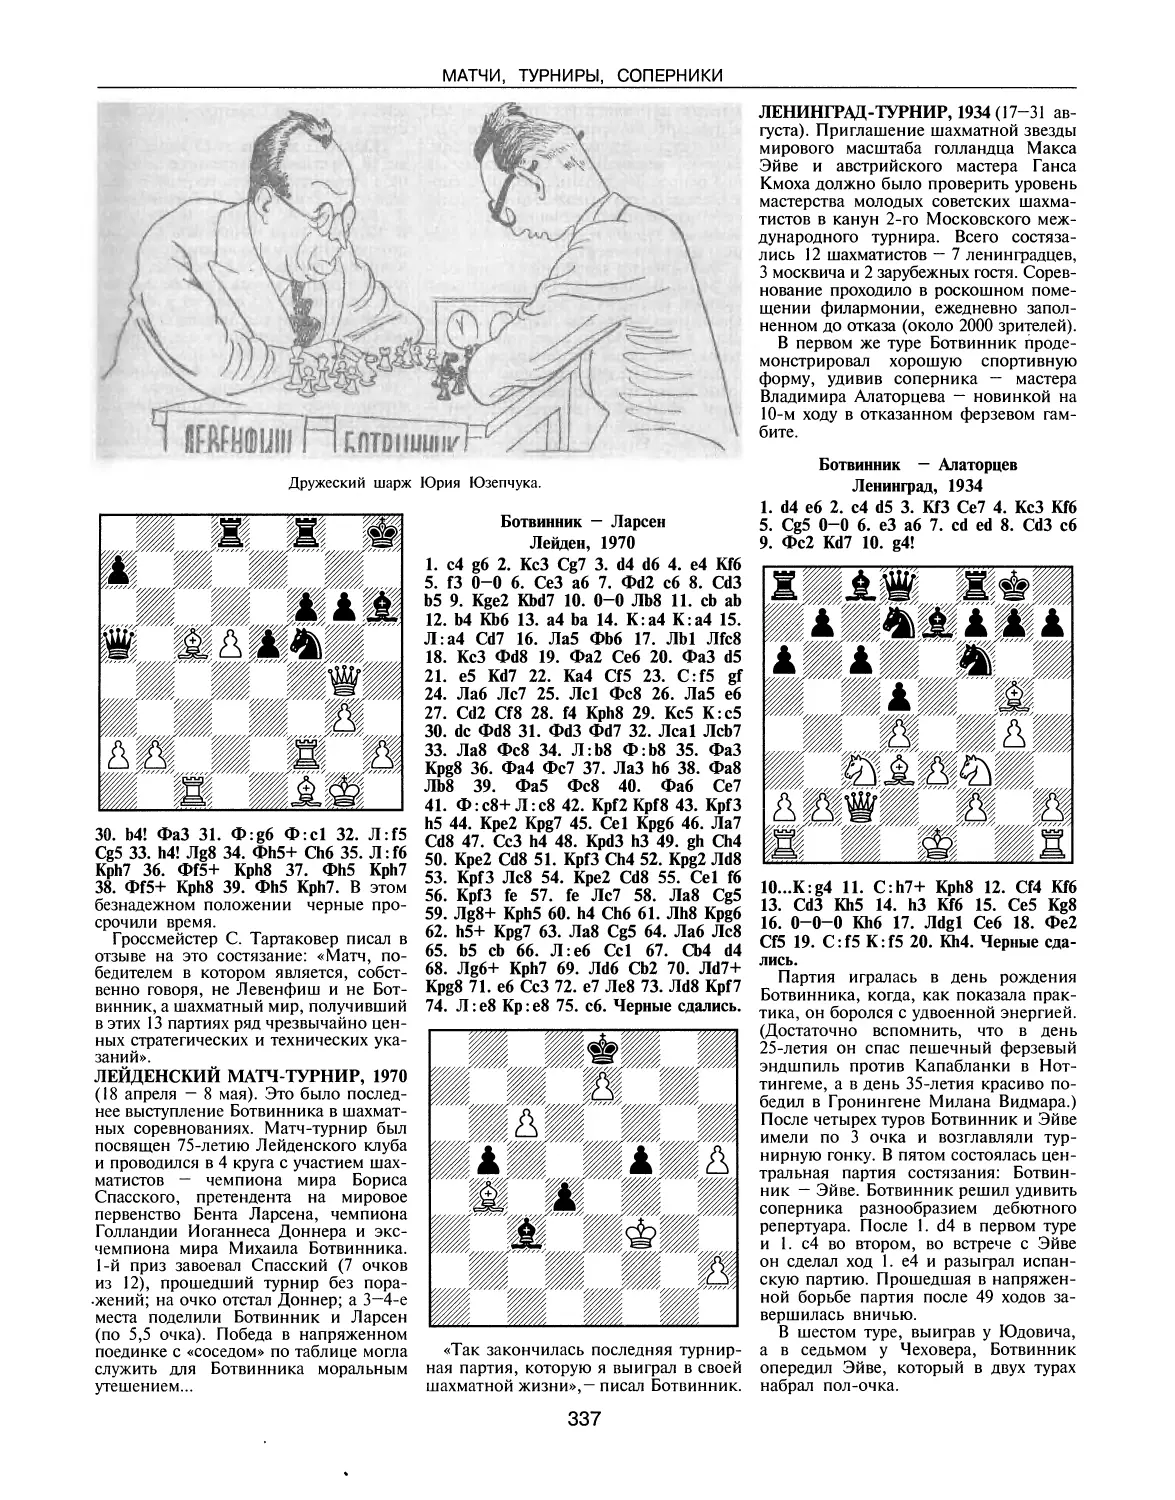 Лейденский матч-турнир, 1970
Ленинград-турнир, 1934